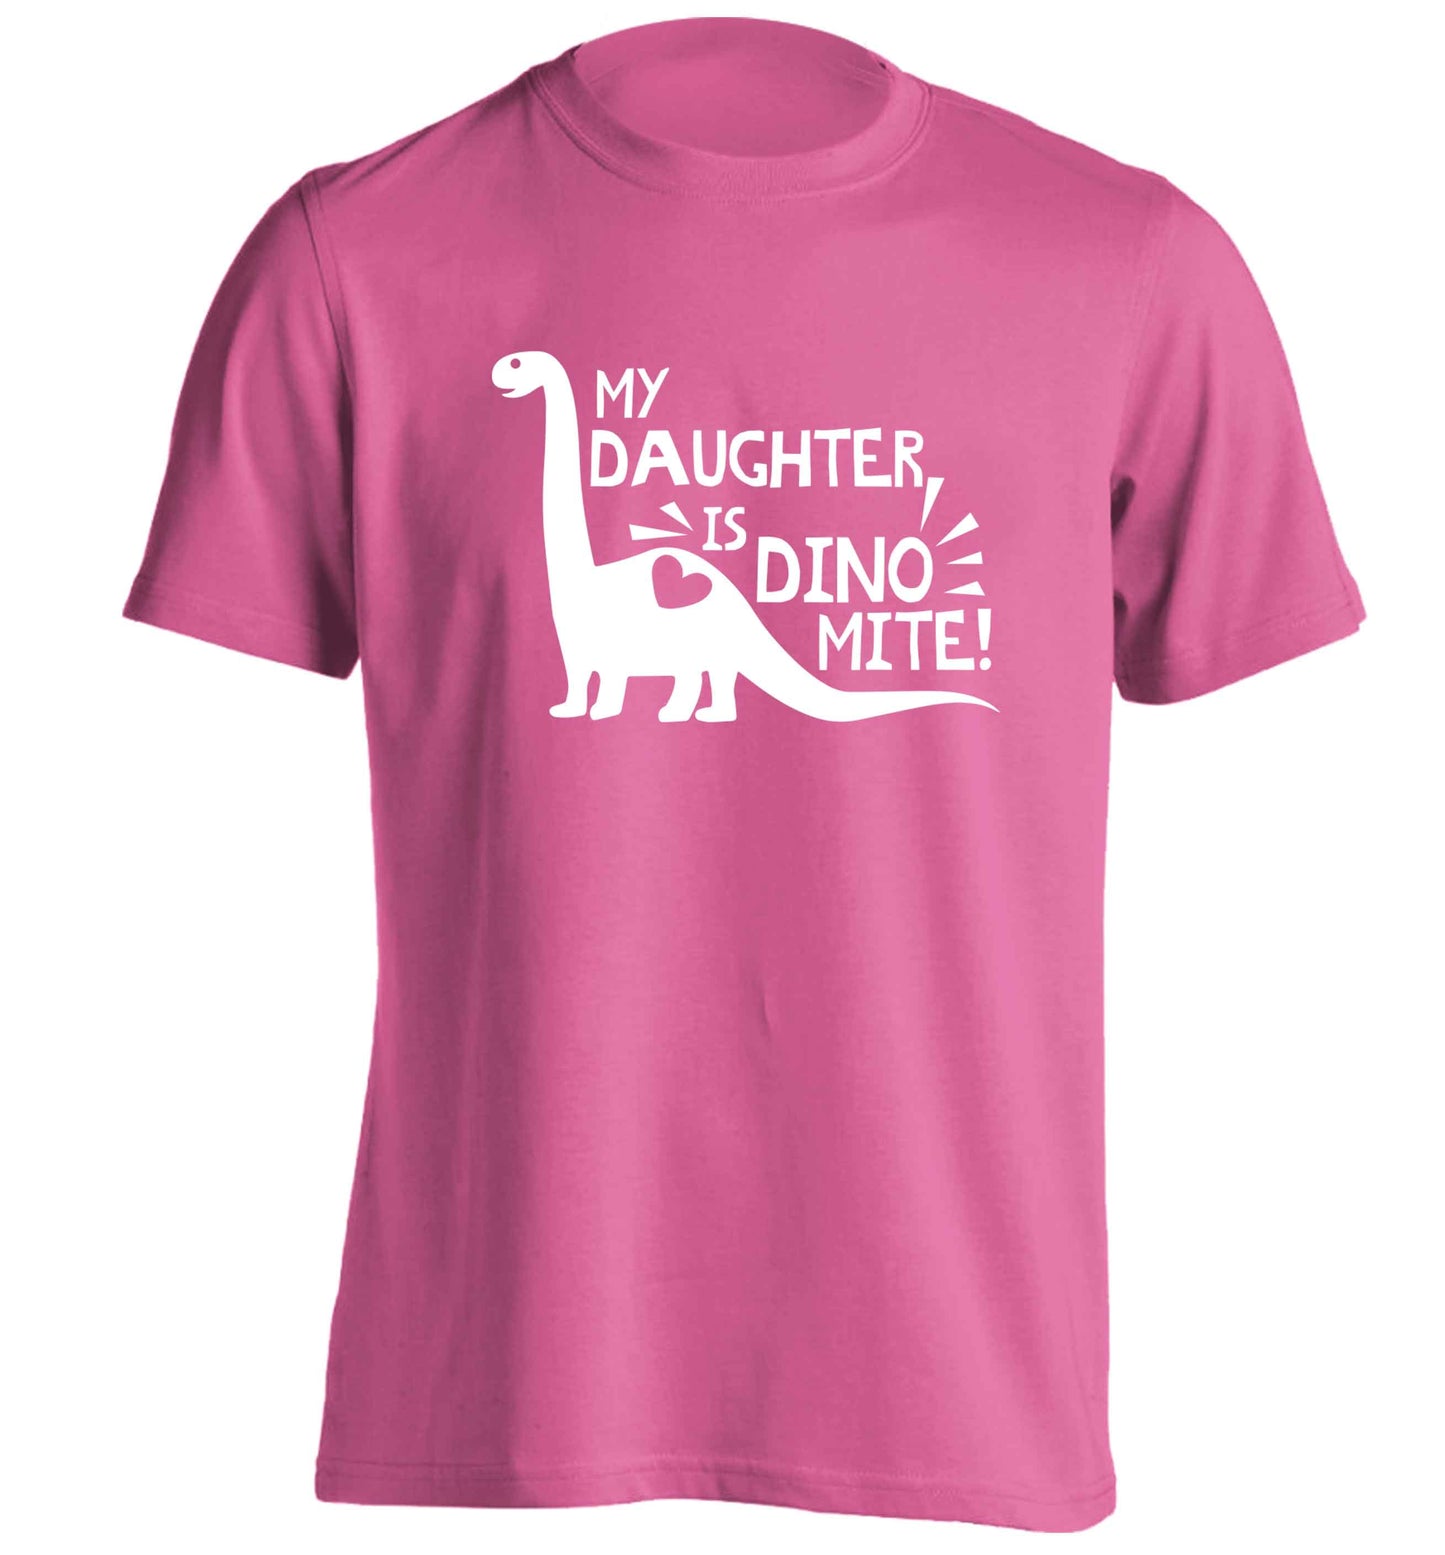 My daughter is dinomite! adults unisex pink Tshirt 2XL